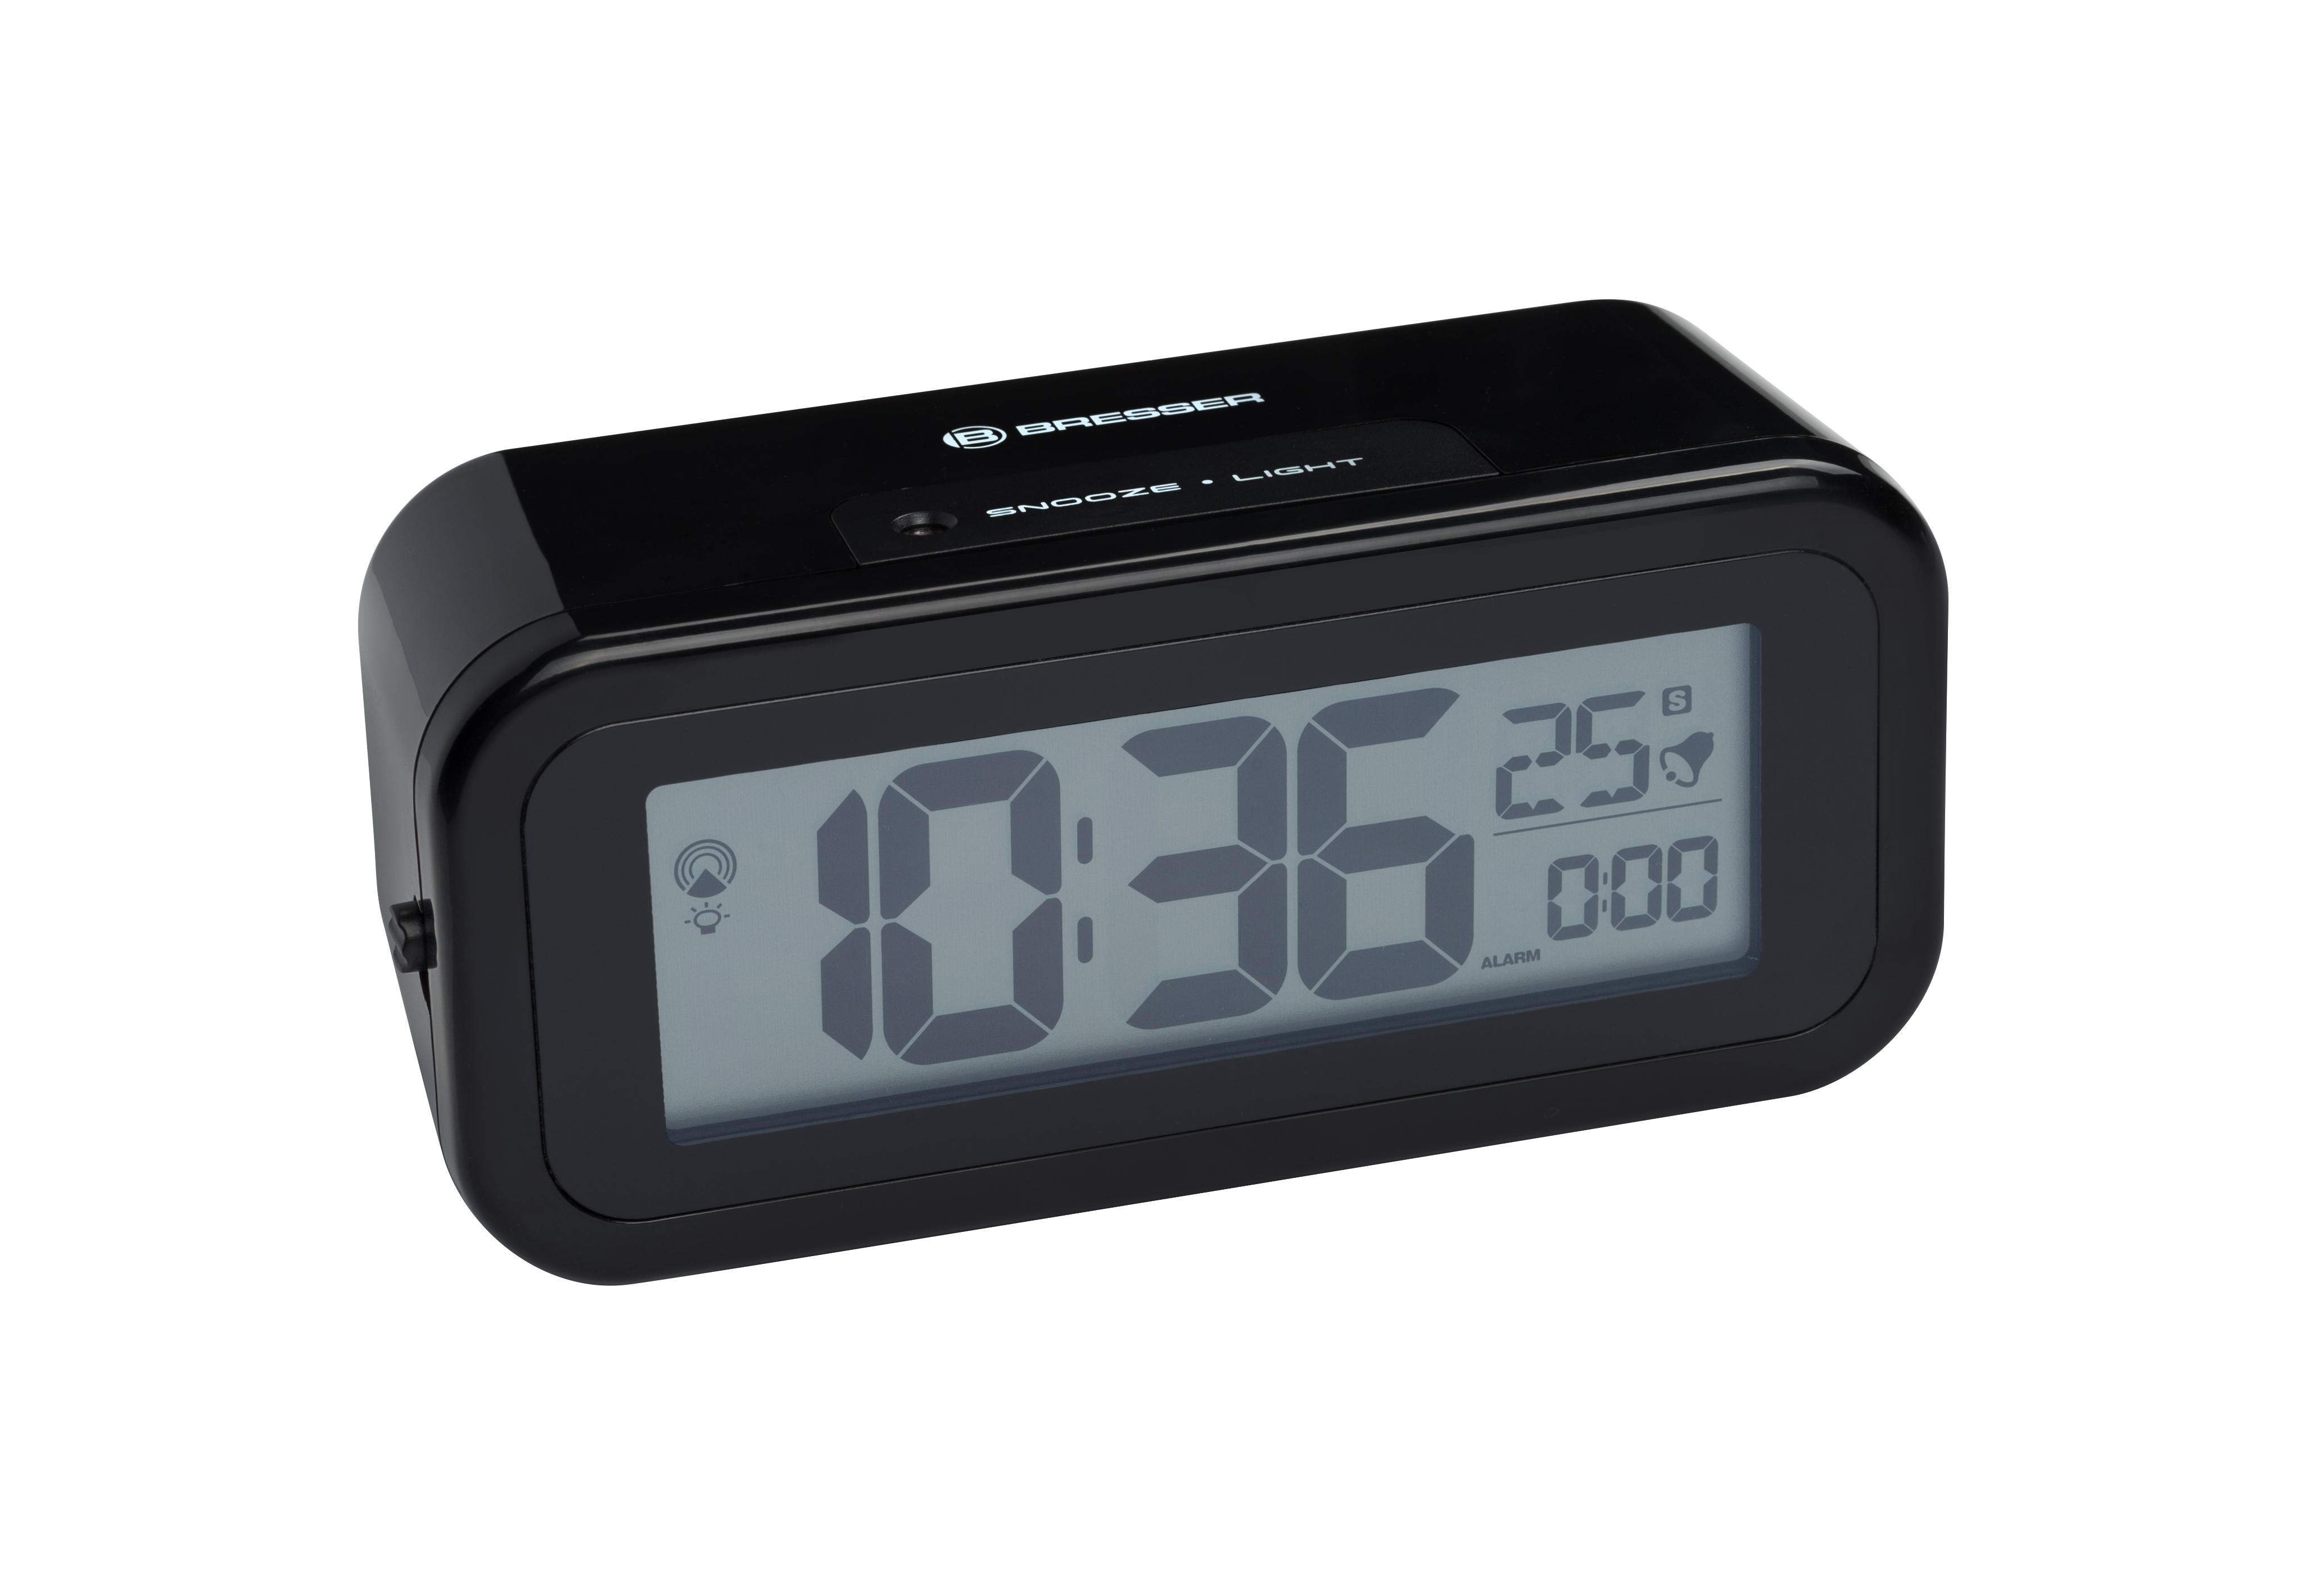 BRESSER MyTime Amber radio controlled Alarm Clock